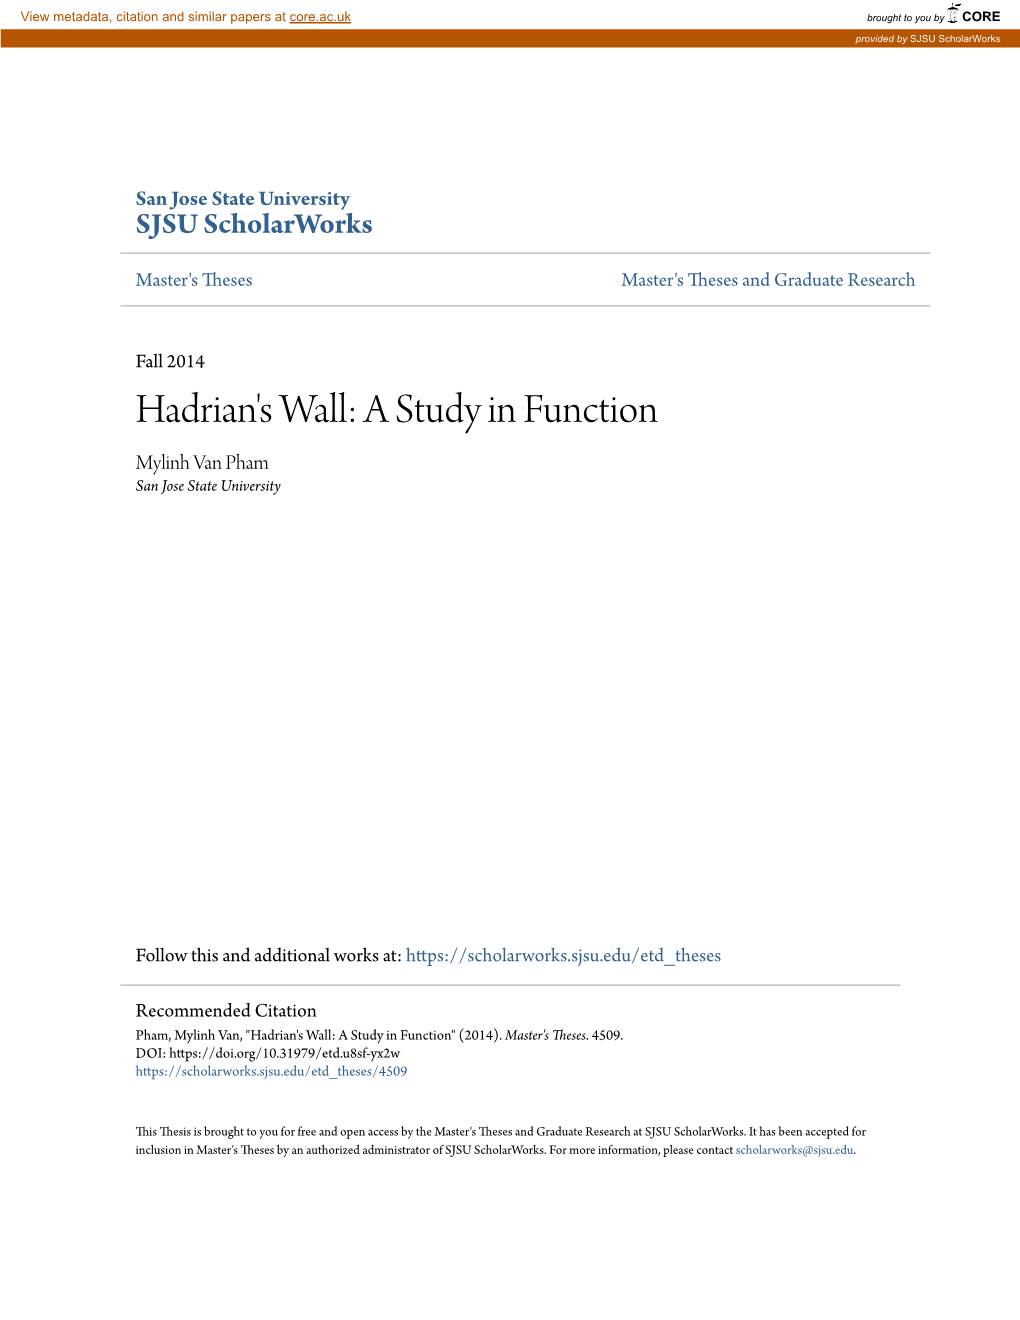 Hadrian's Wall: a Study in Function Mylinh Van Pham San Jose State University